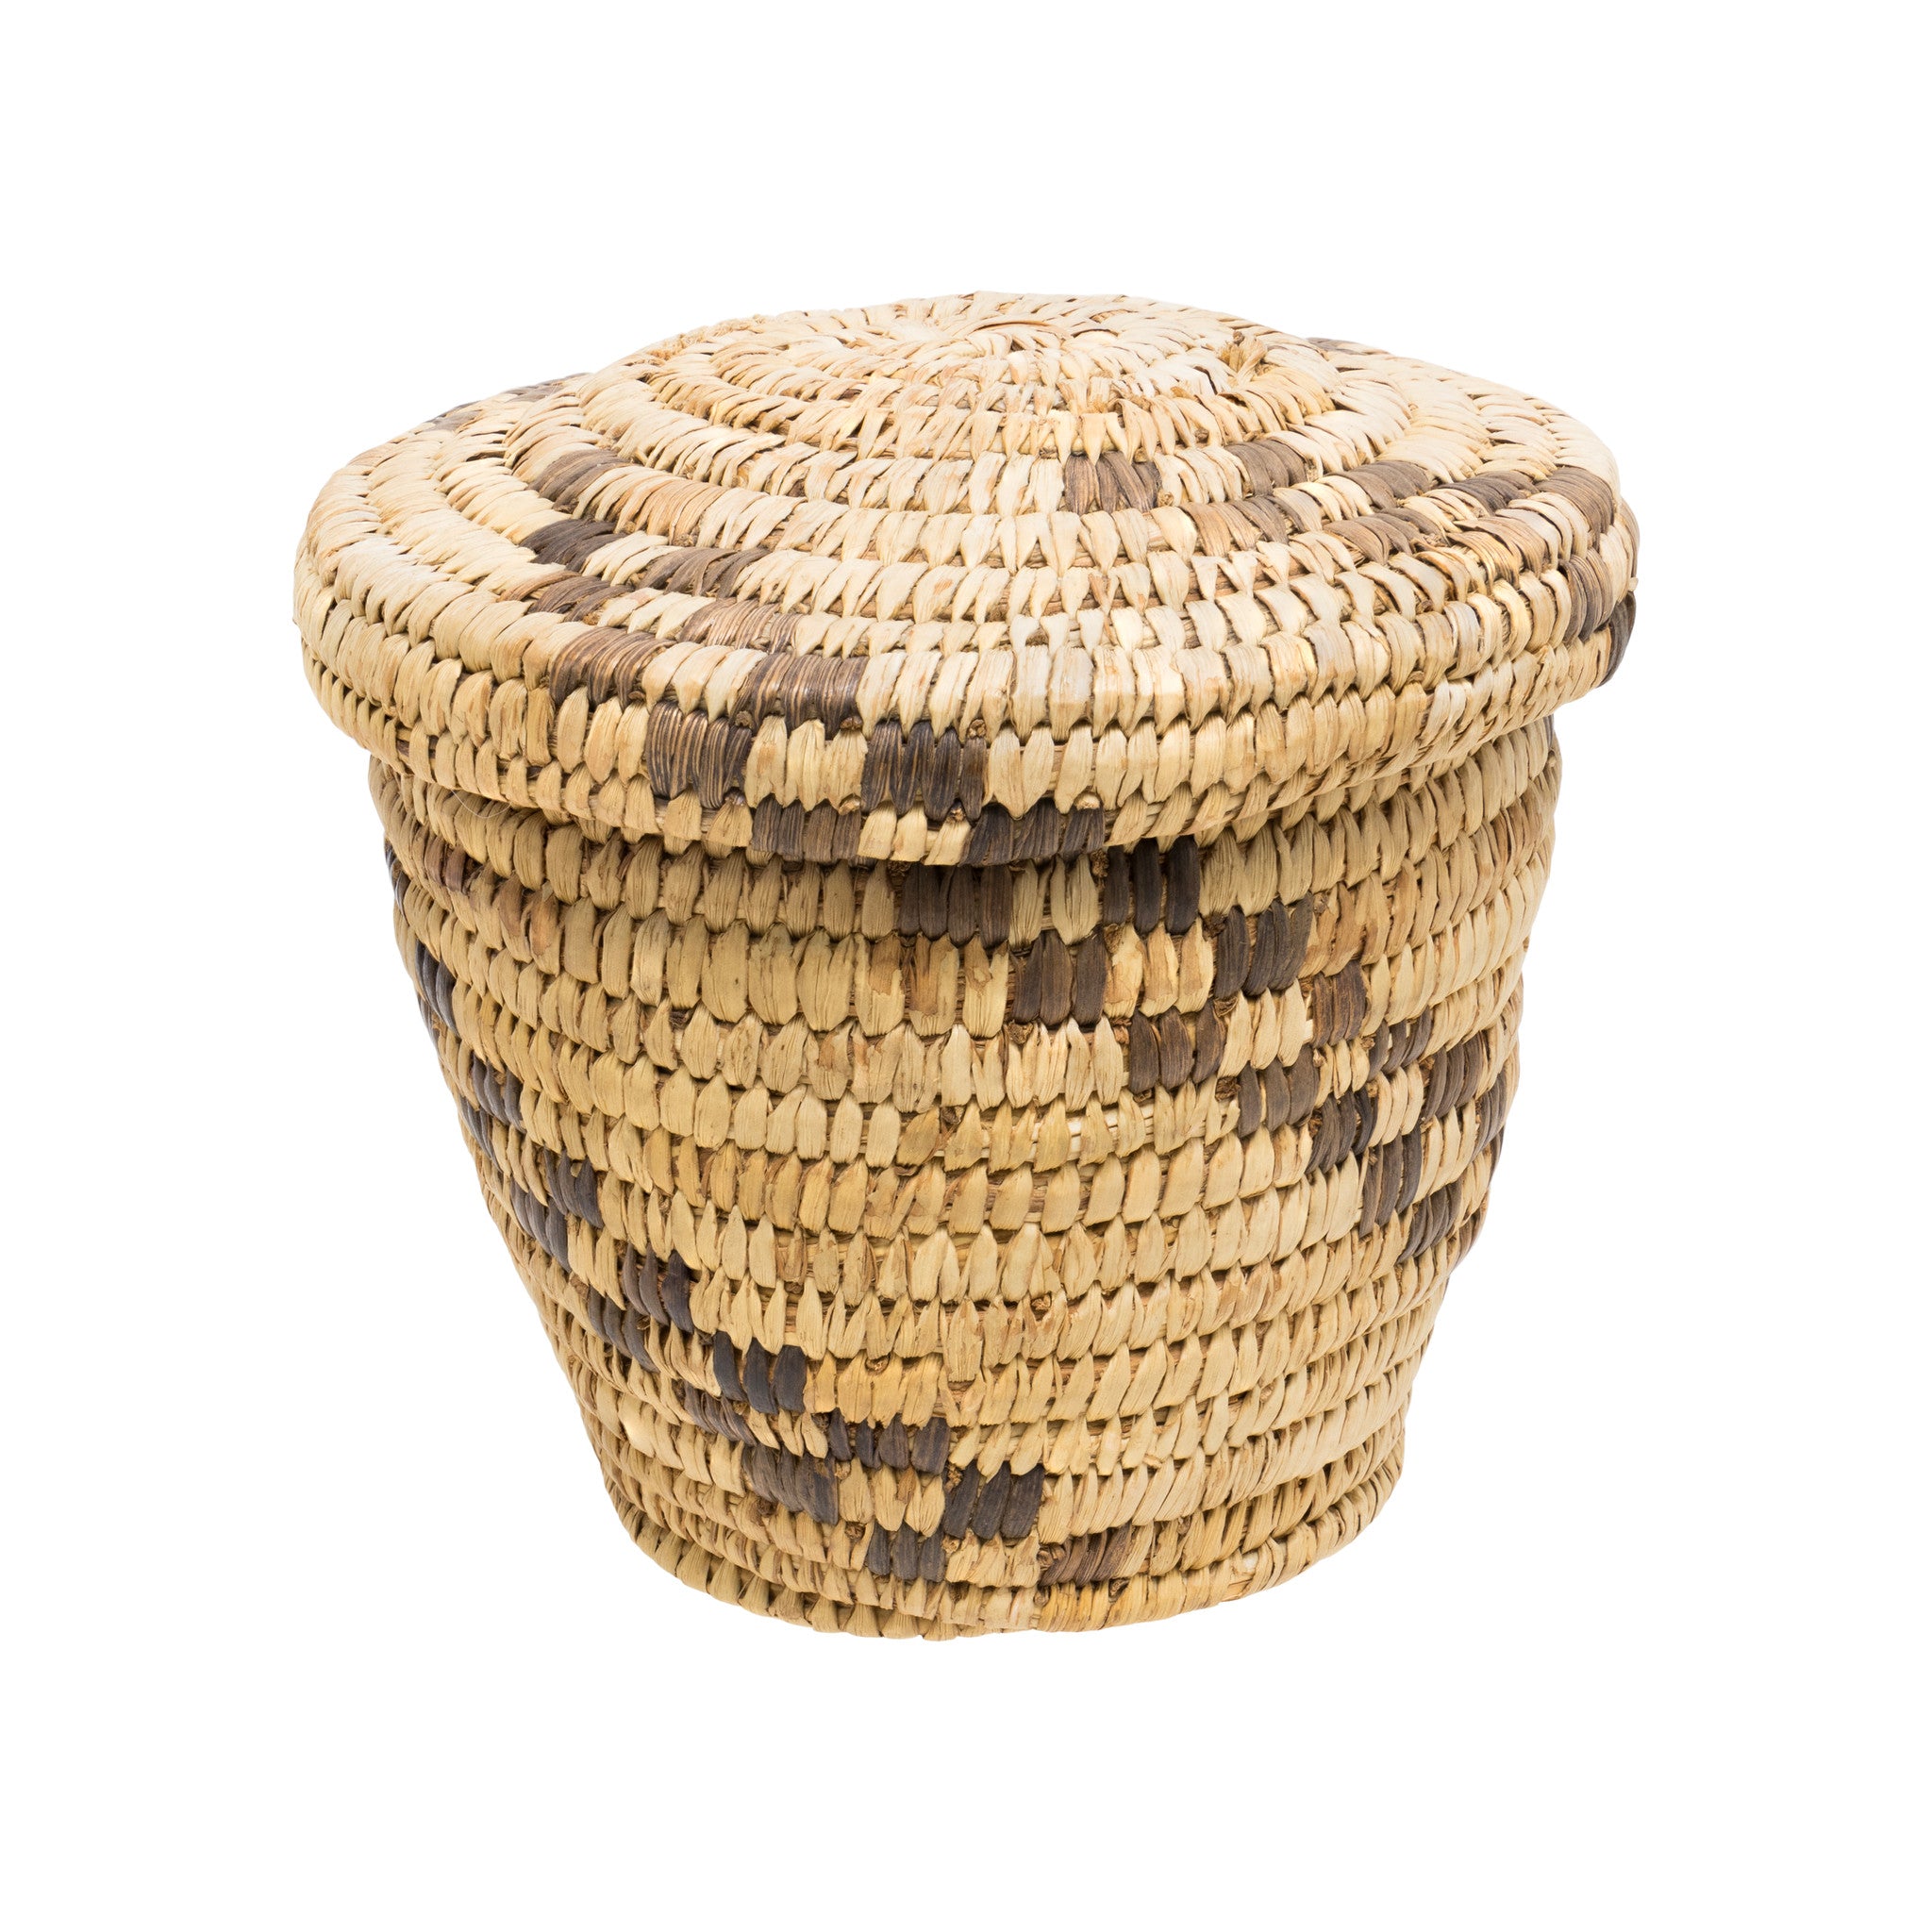 Lidded Papago Basketry Jar